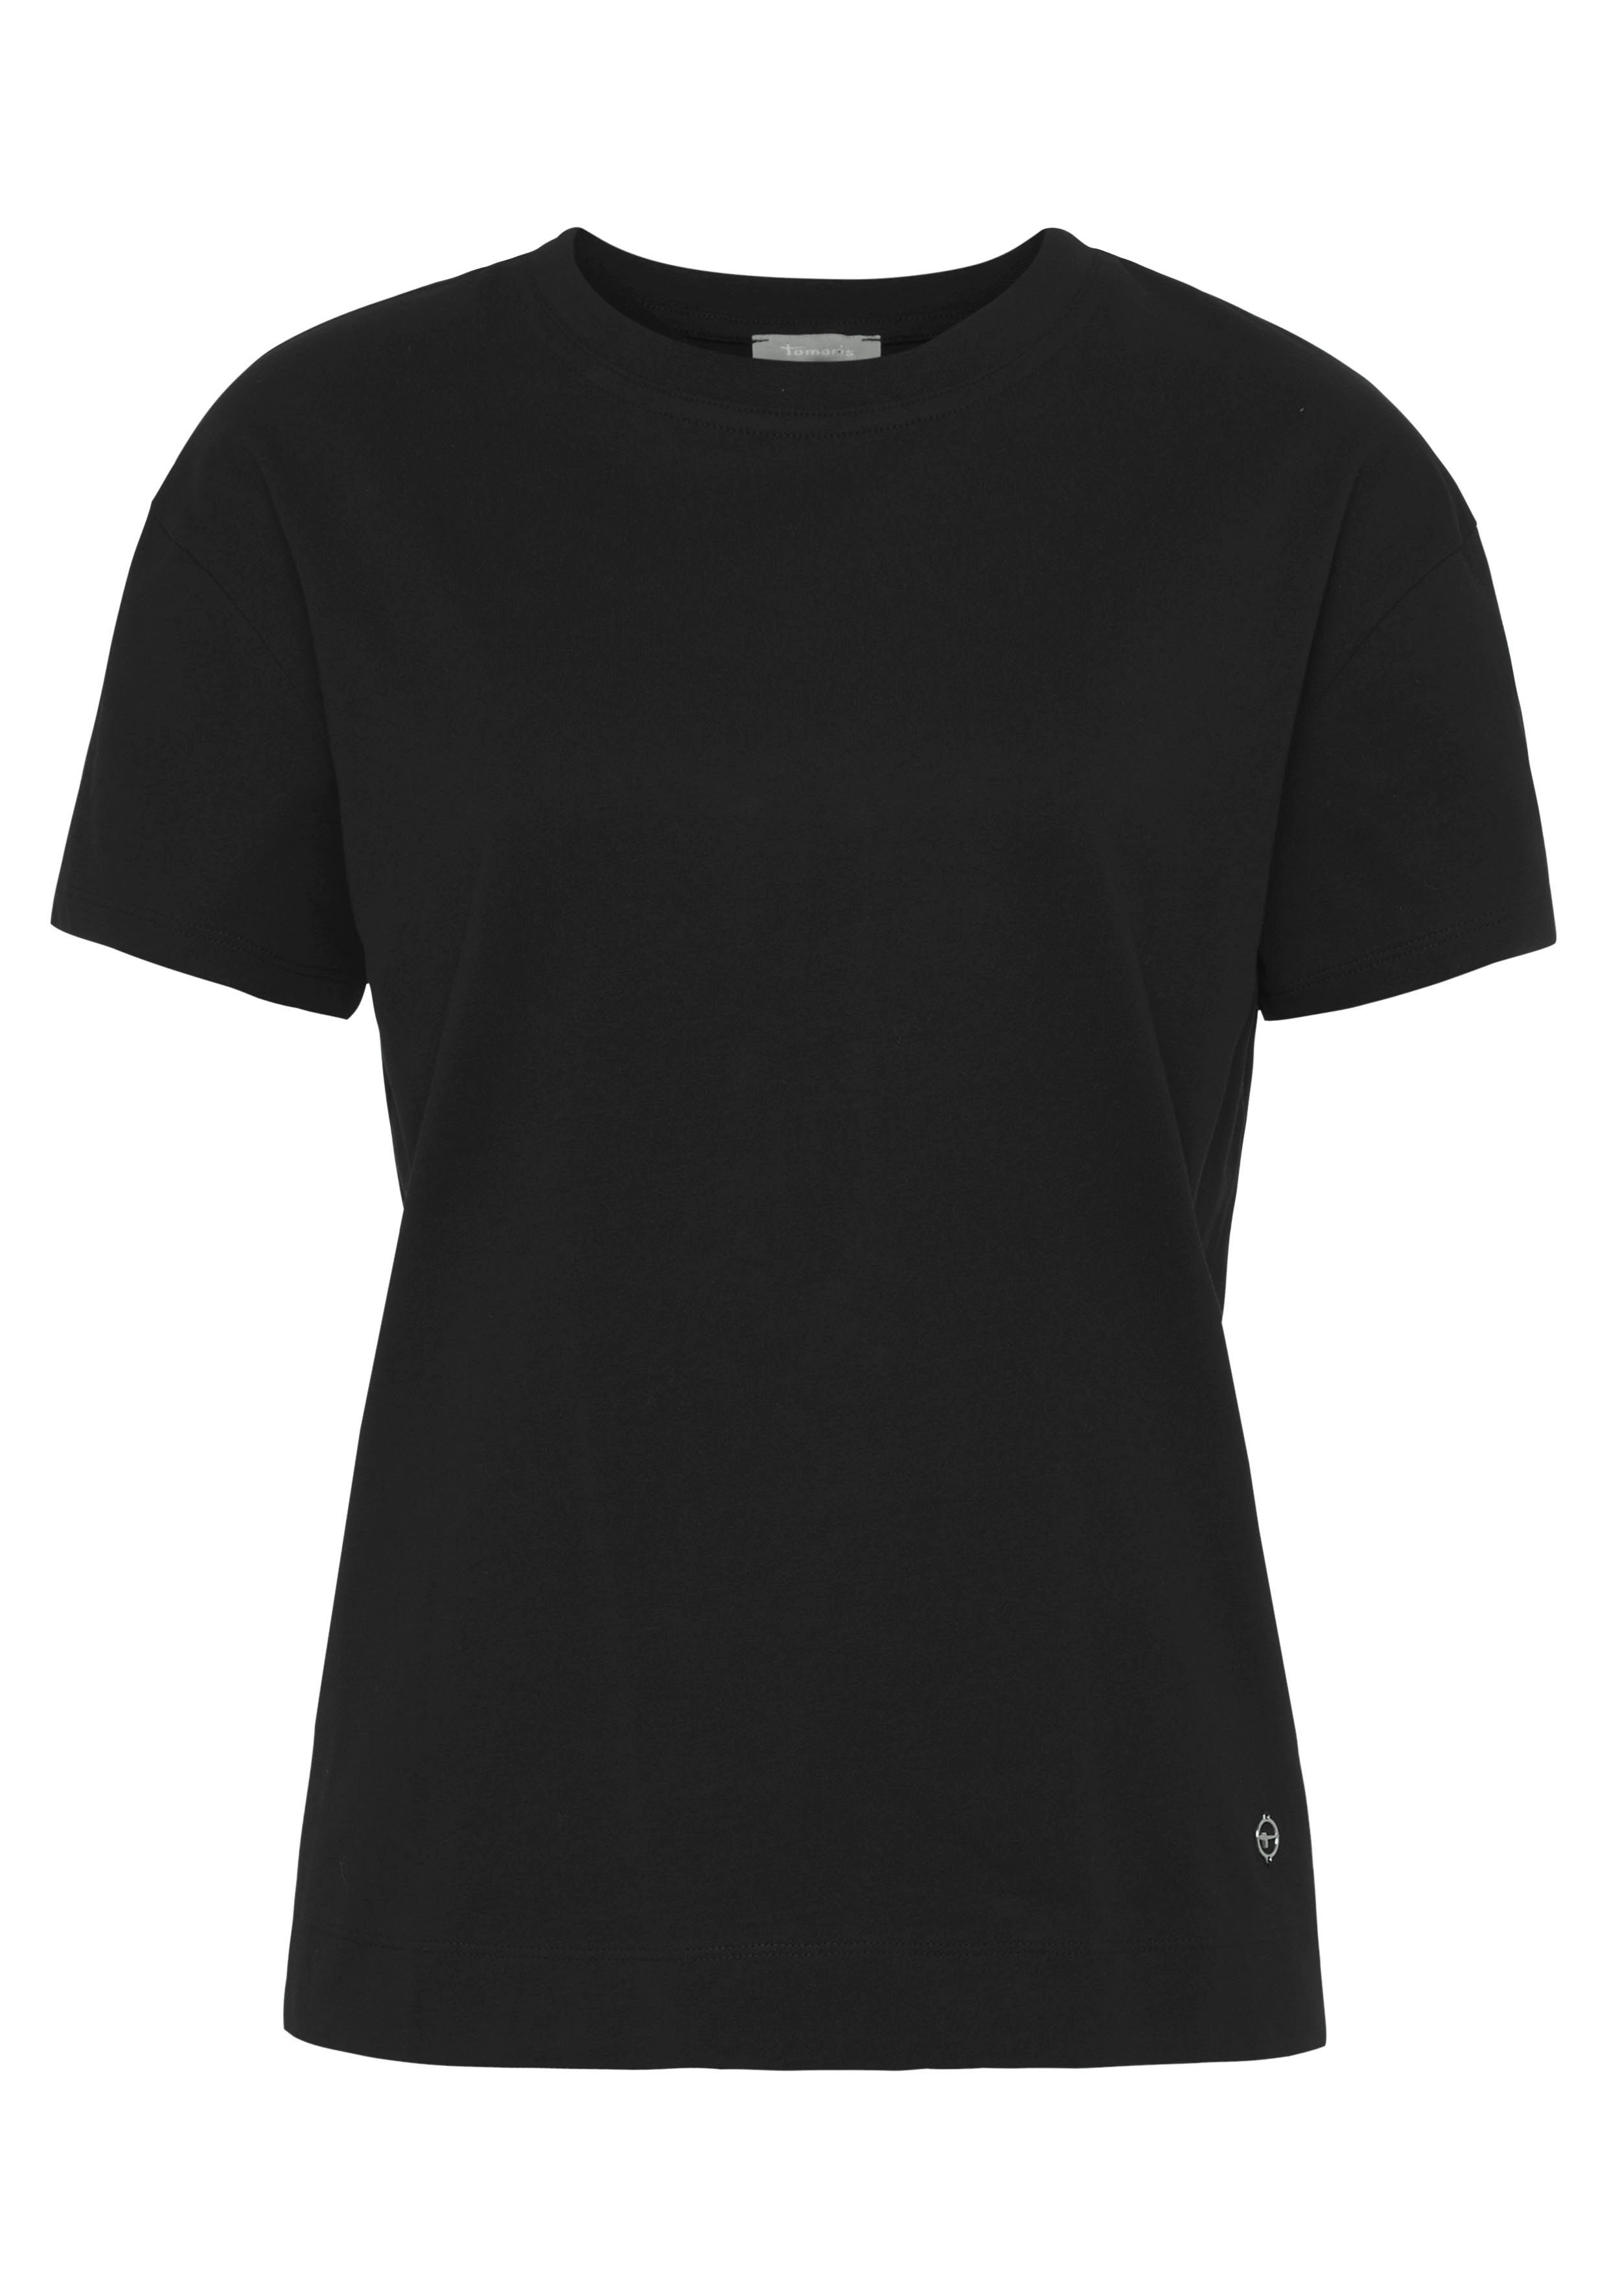 T-Shirt schwarz Oversized-Look im Tamaris